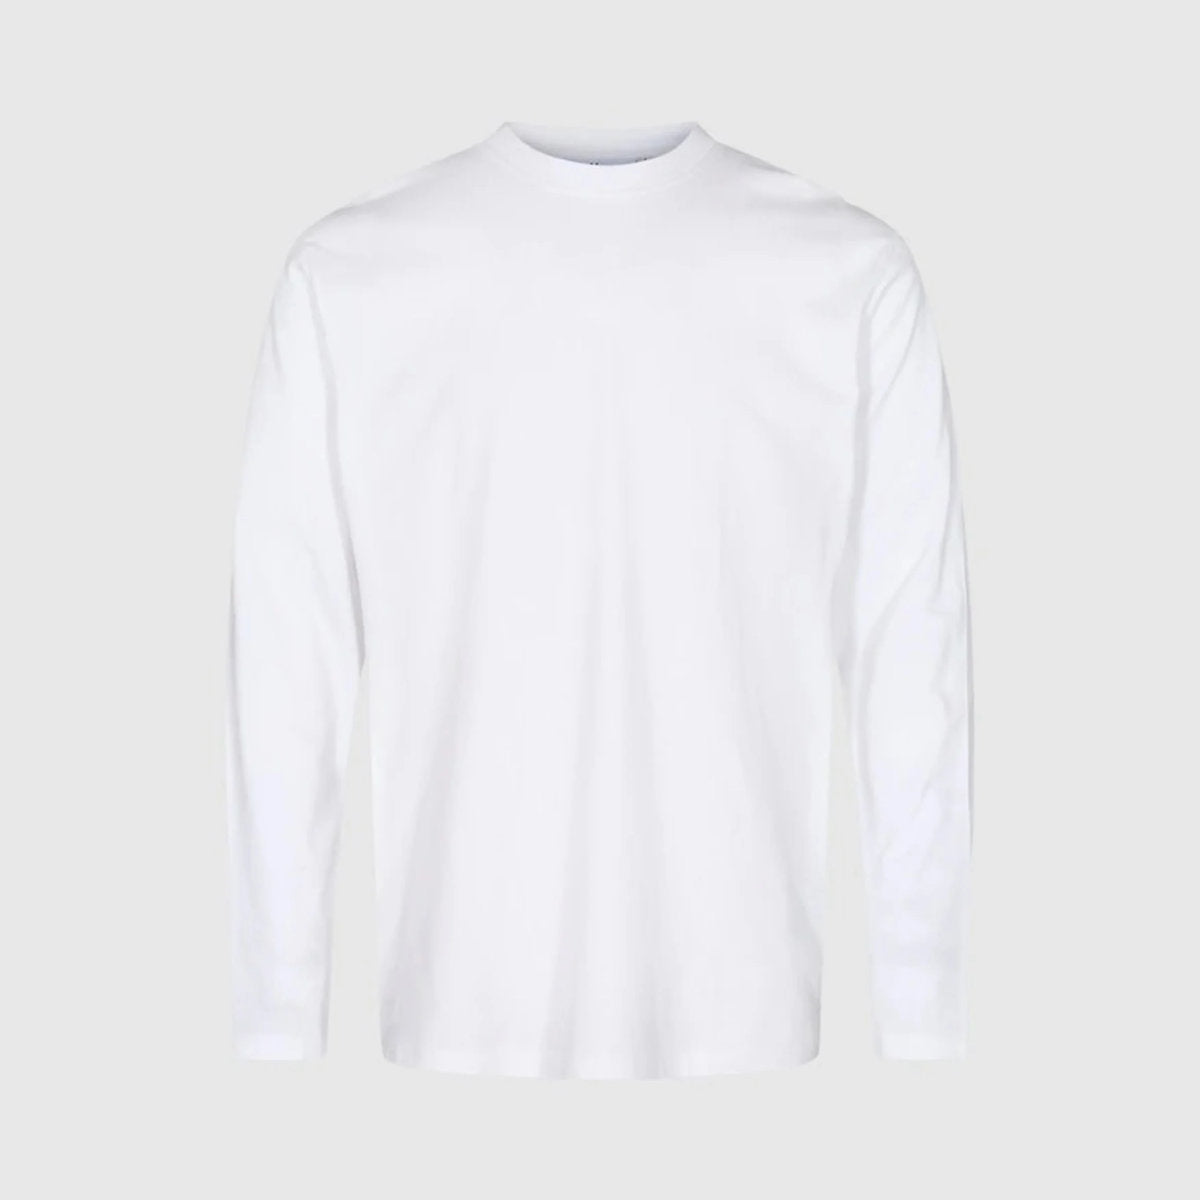 'MINIMUM Aarhus 2.0 3255A Long Sleeve Tee' in 'White' colour